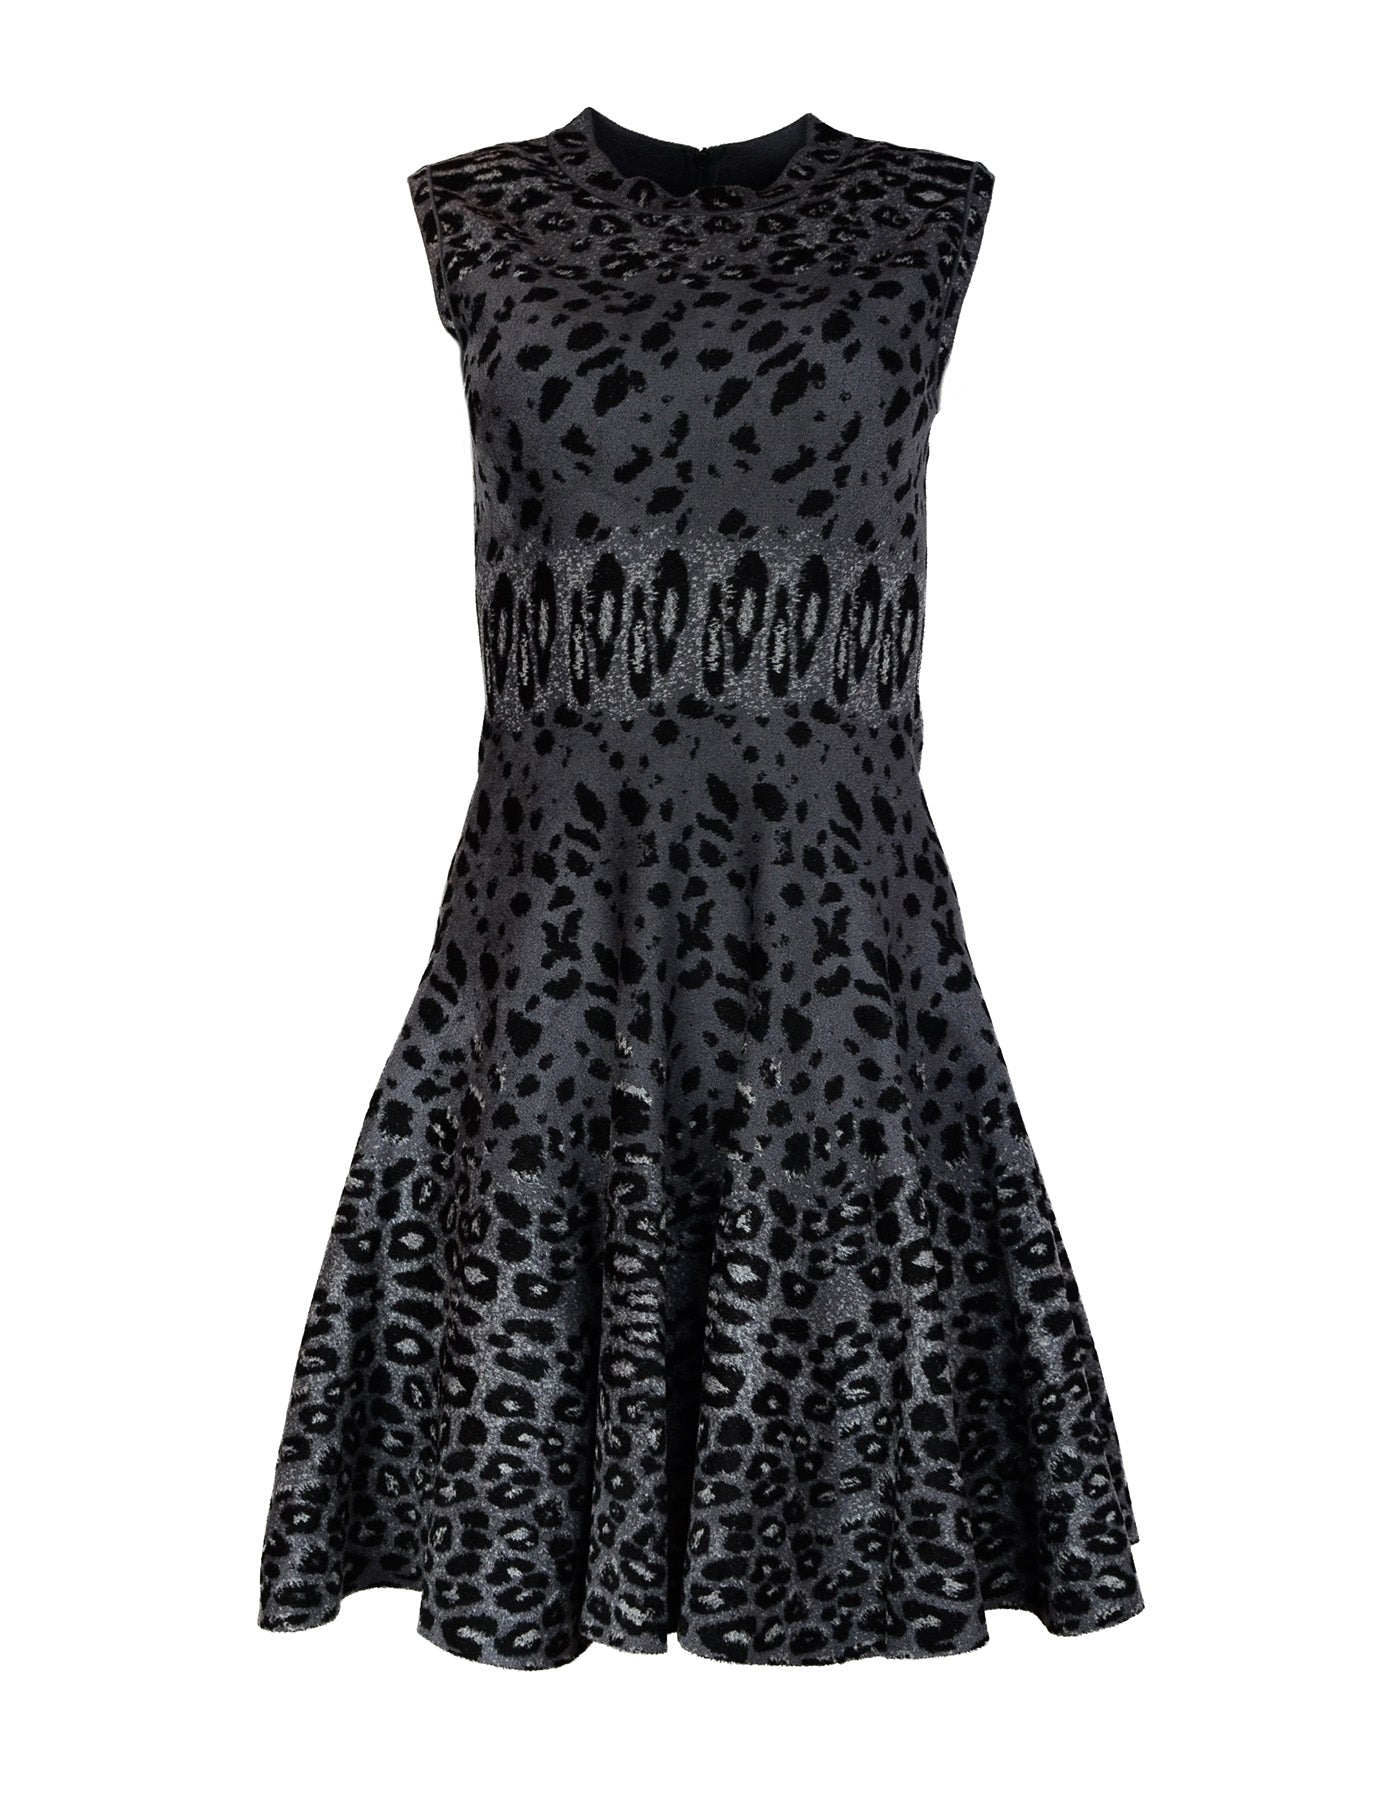 Alaia Sleeveless Grey Leopard Fit & Flare Dress Sz FR40